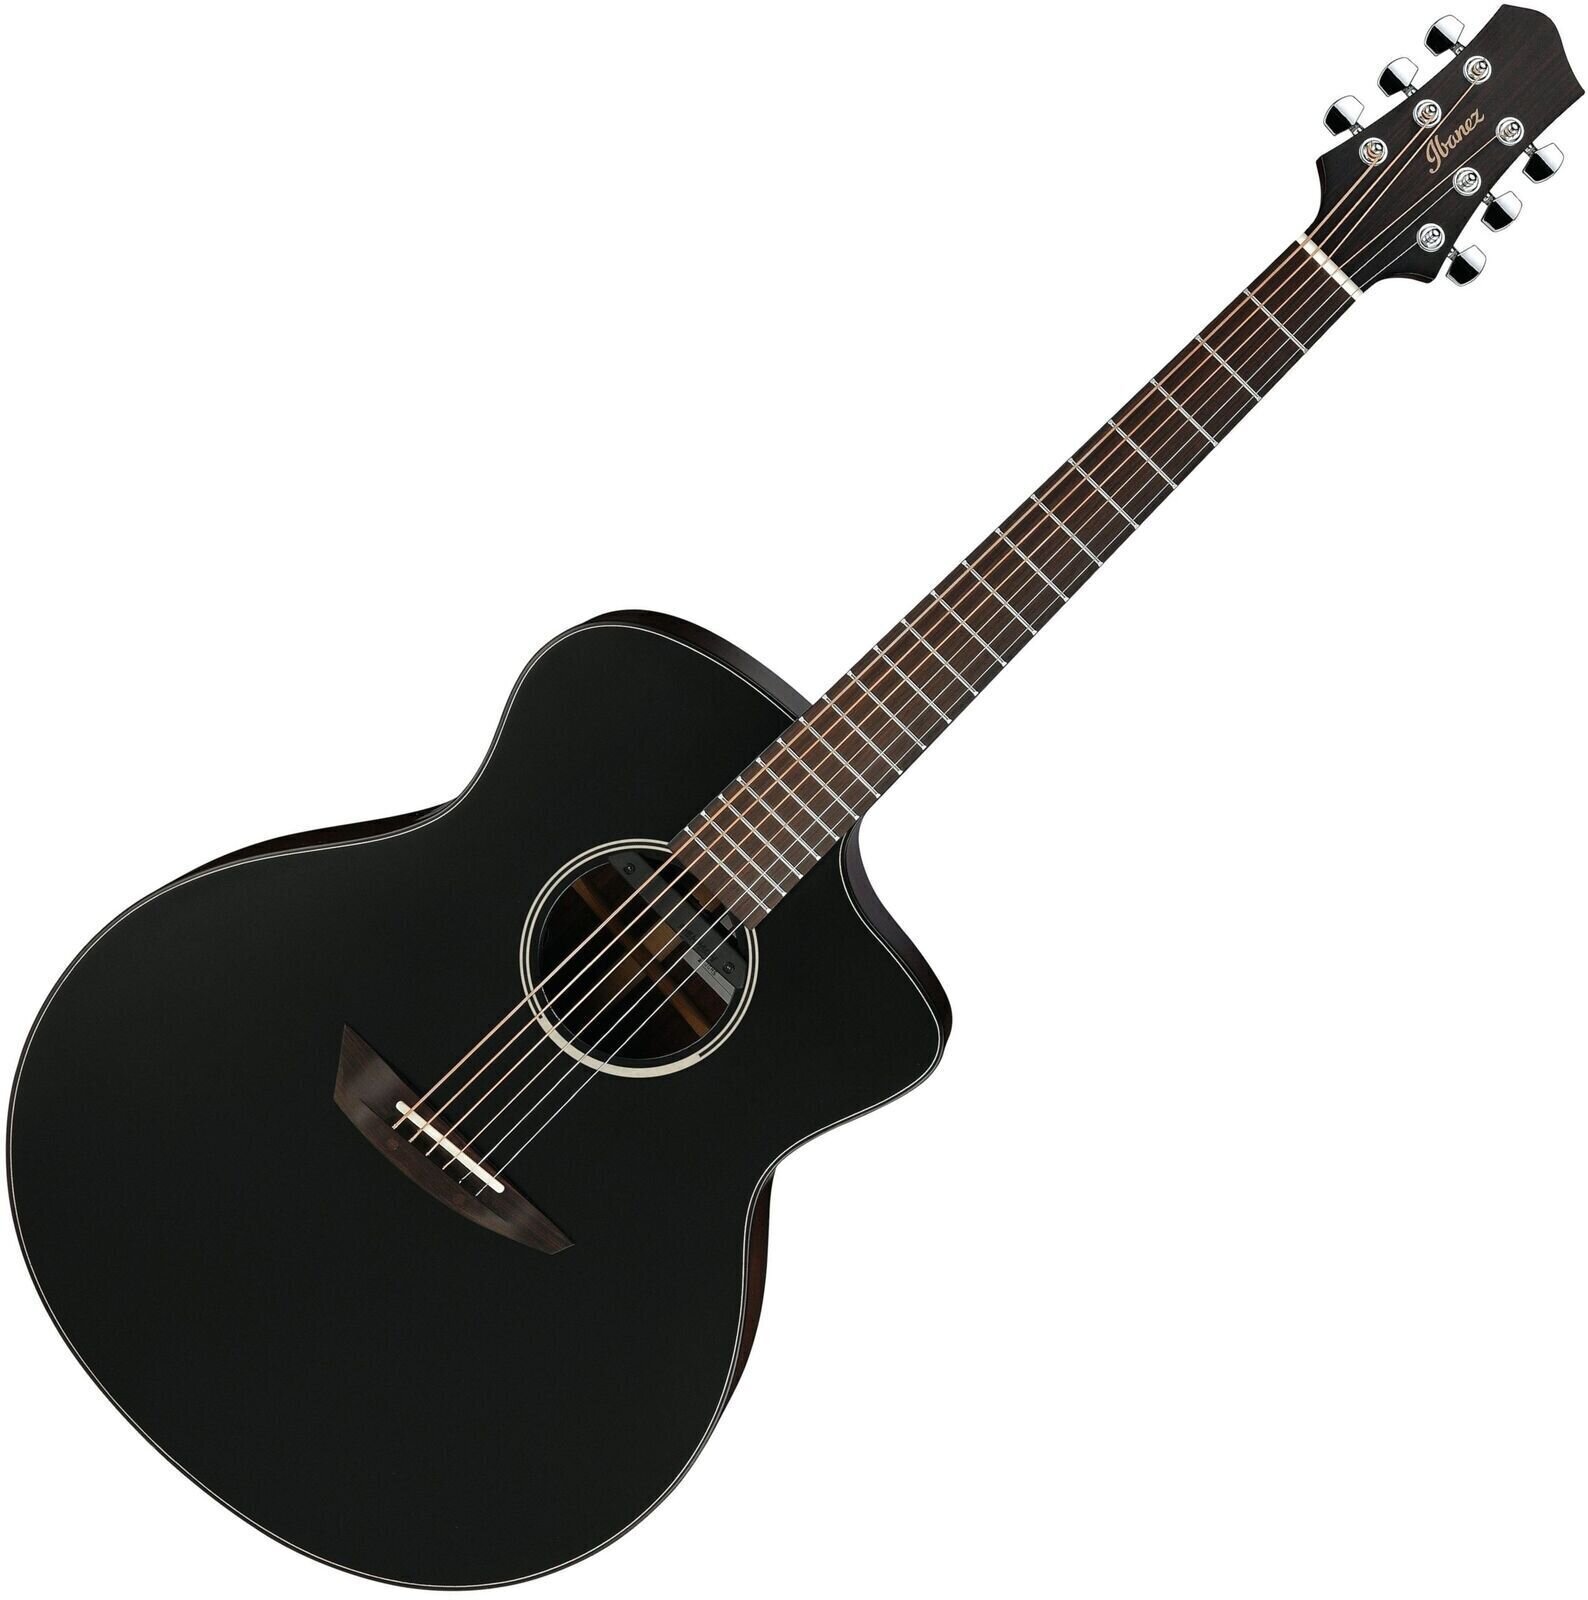 Elektroakustická kytara Jumbo Ibanez JGM5-BSN Black Satin-Natural